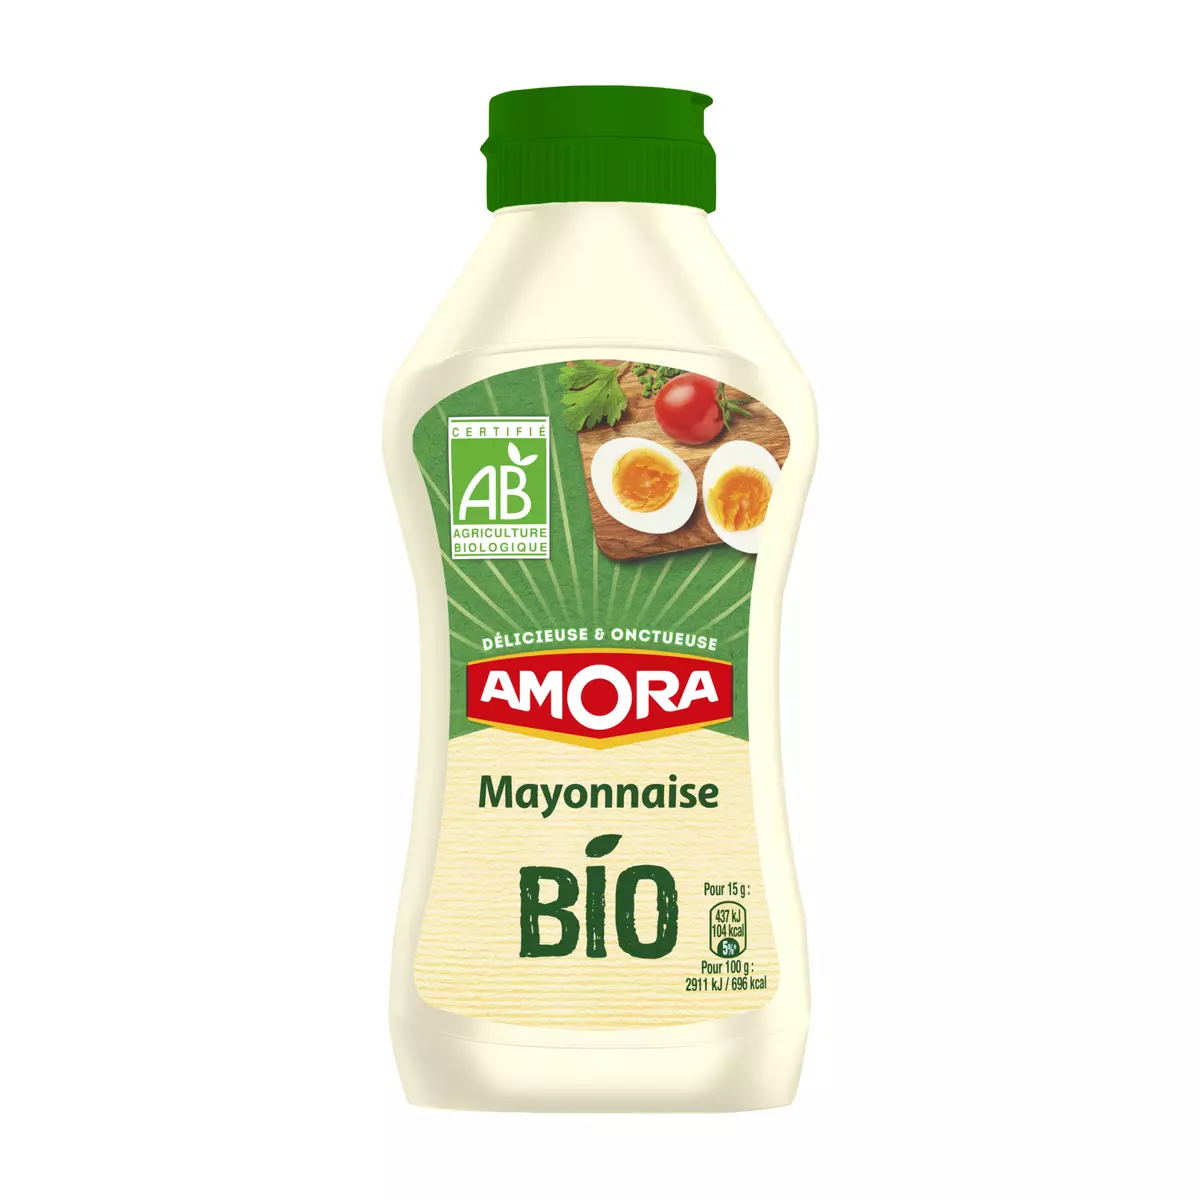 AMORA Mayonnaise bio flacon souple 280g